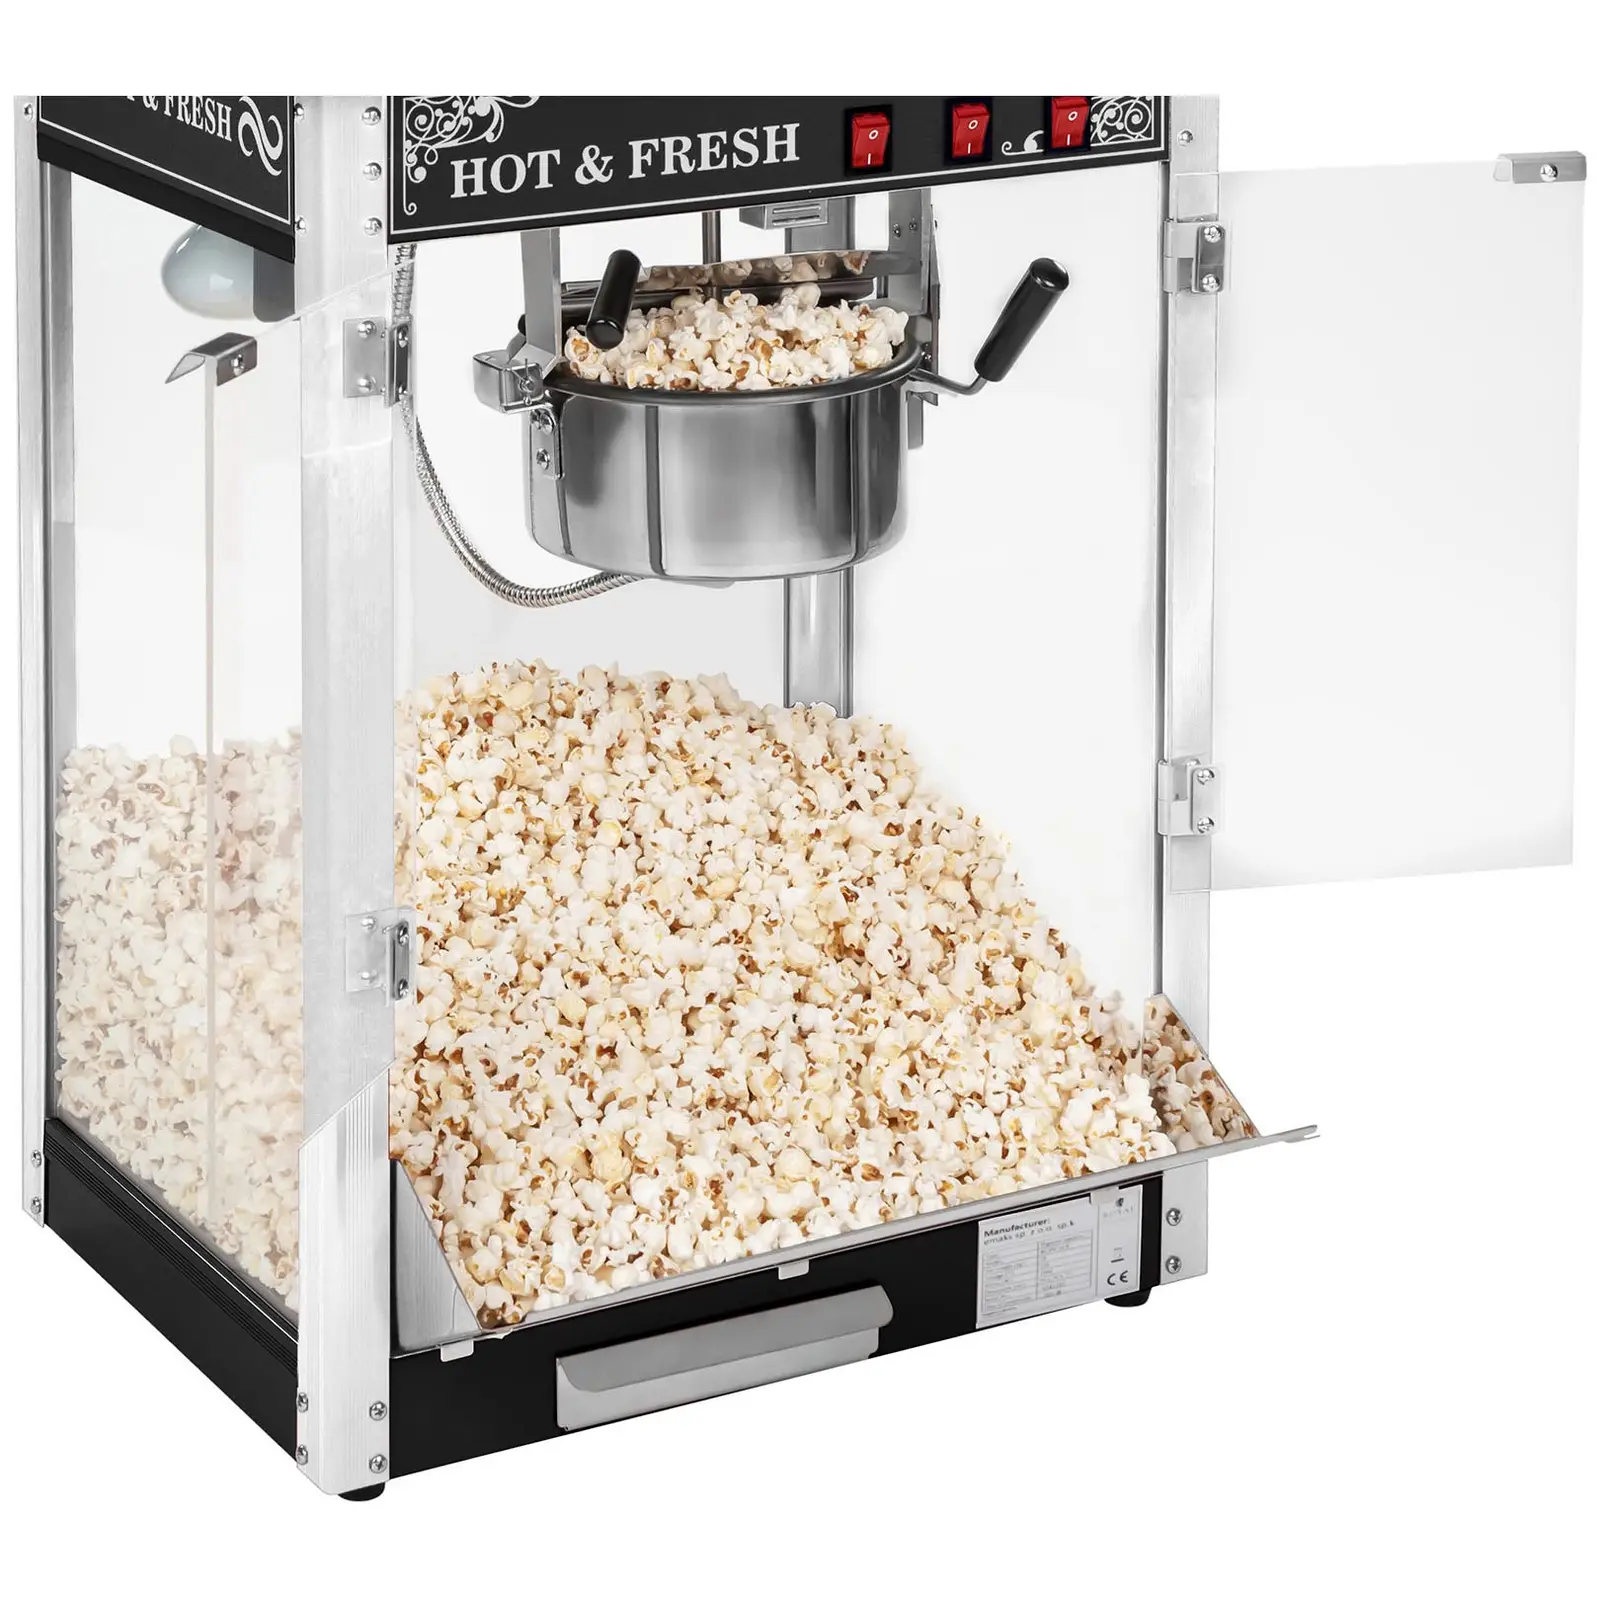 Popcornmaskin med vogn - Retro design - sort